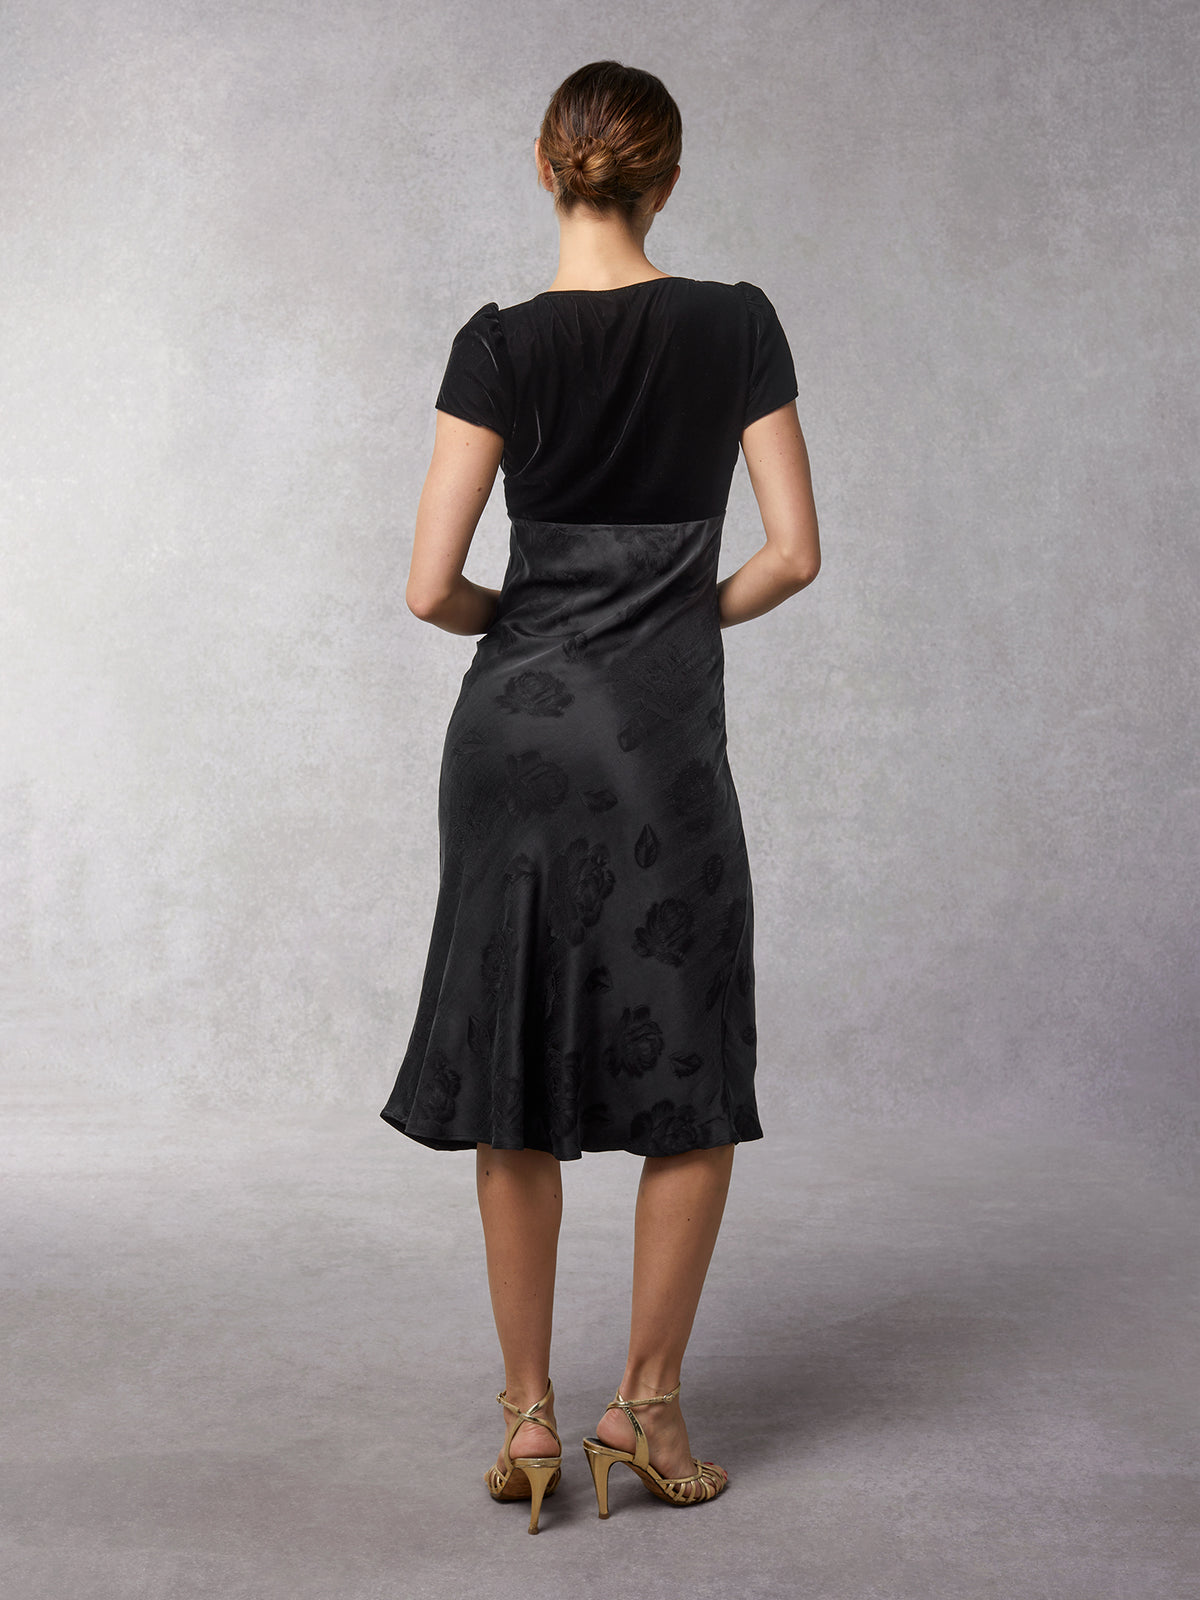 midi • sleeves Paris with Bi-material short | Rouje Rouje dress